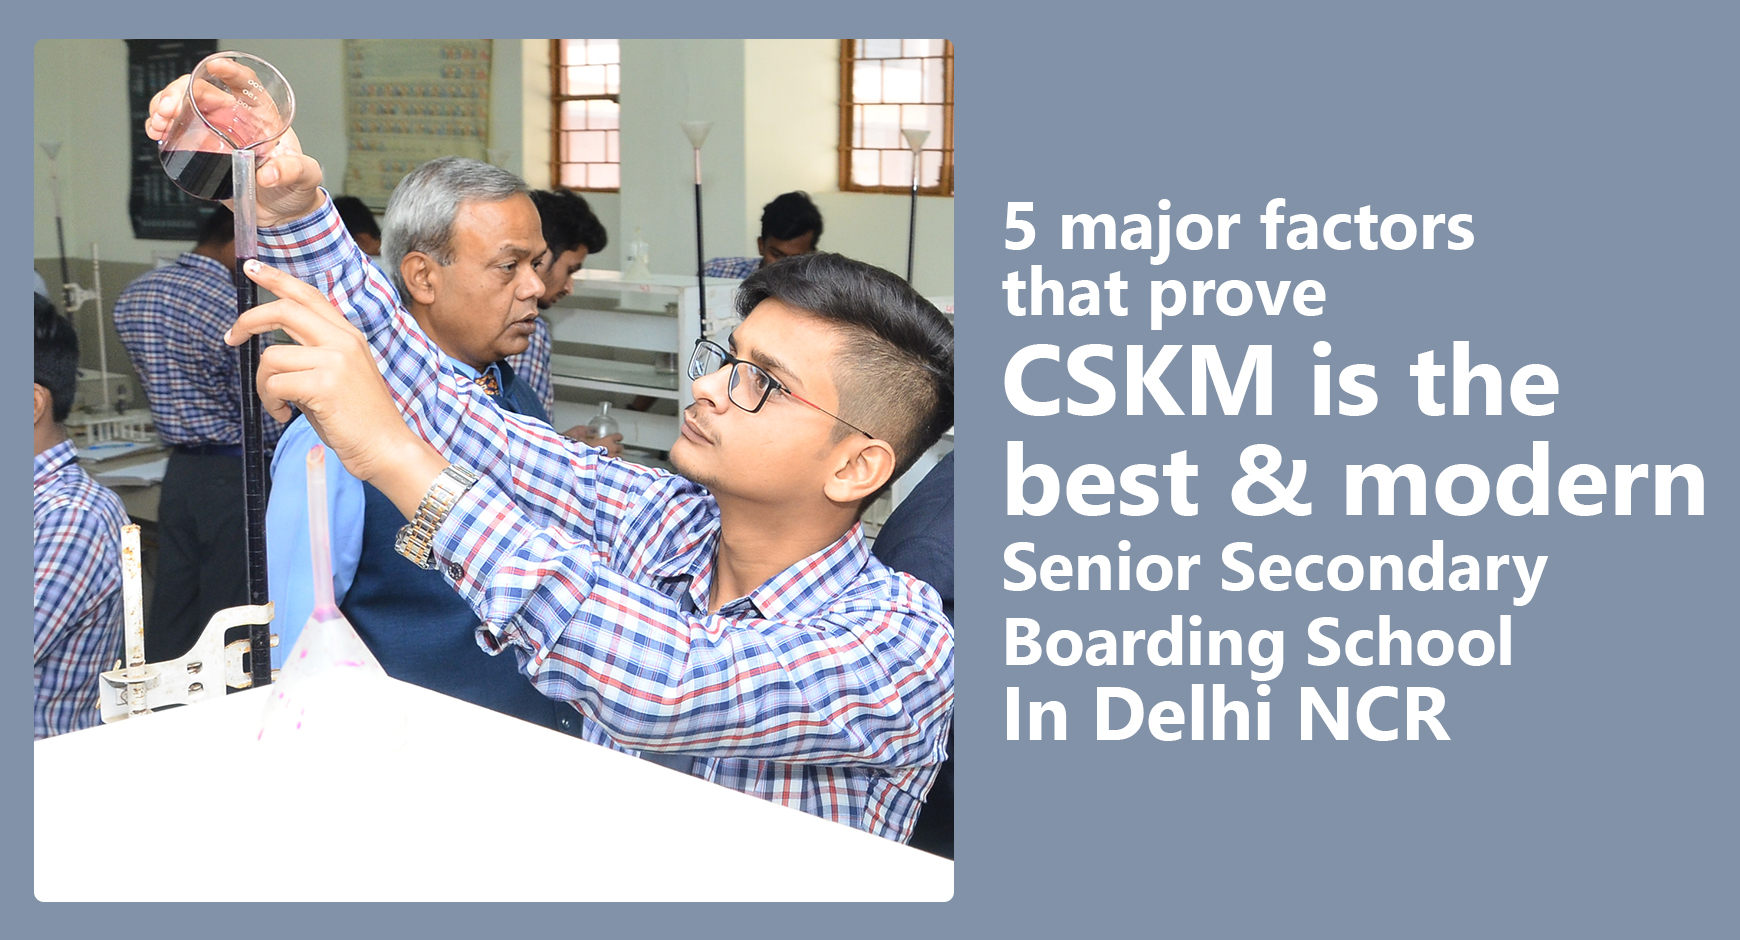 5 major factors that prove CSKM the best & modern Senior Secondary Boarding School in Delhi NCR 